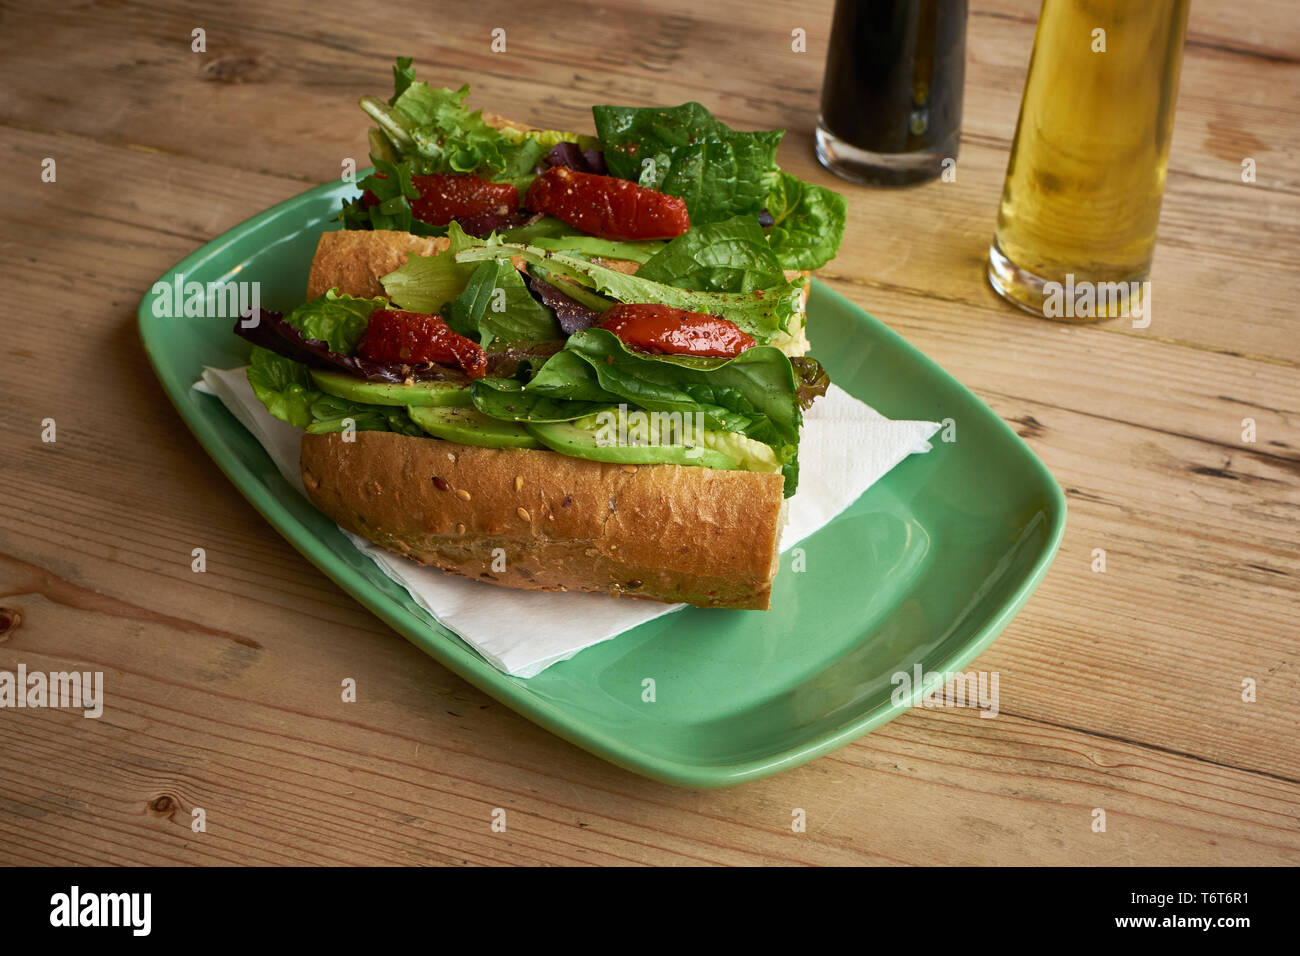 Sundried tomato sandwich on wooden table Stock Photo